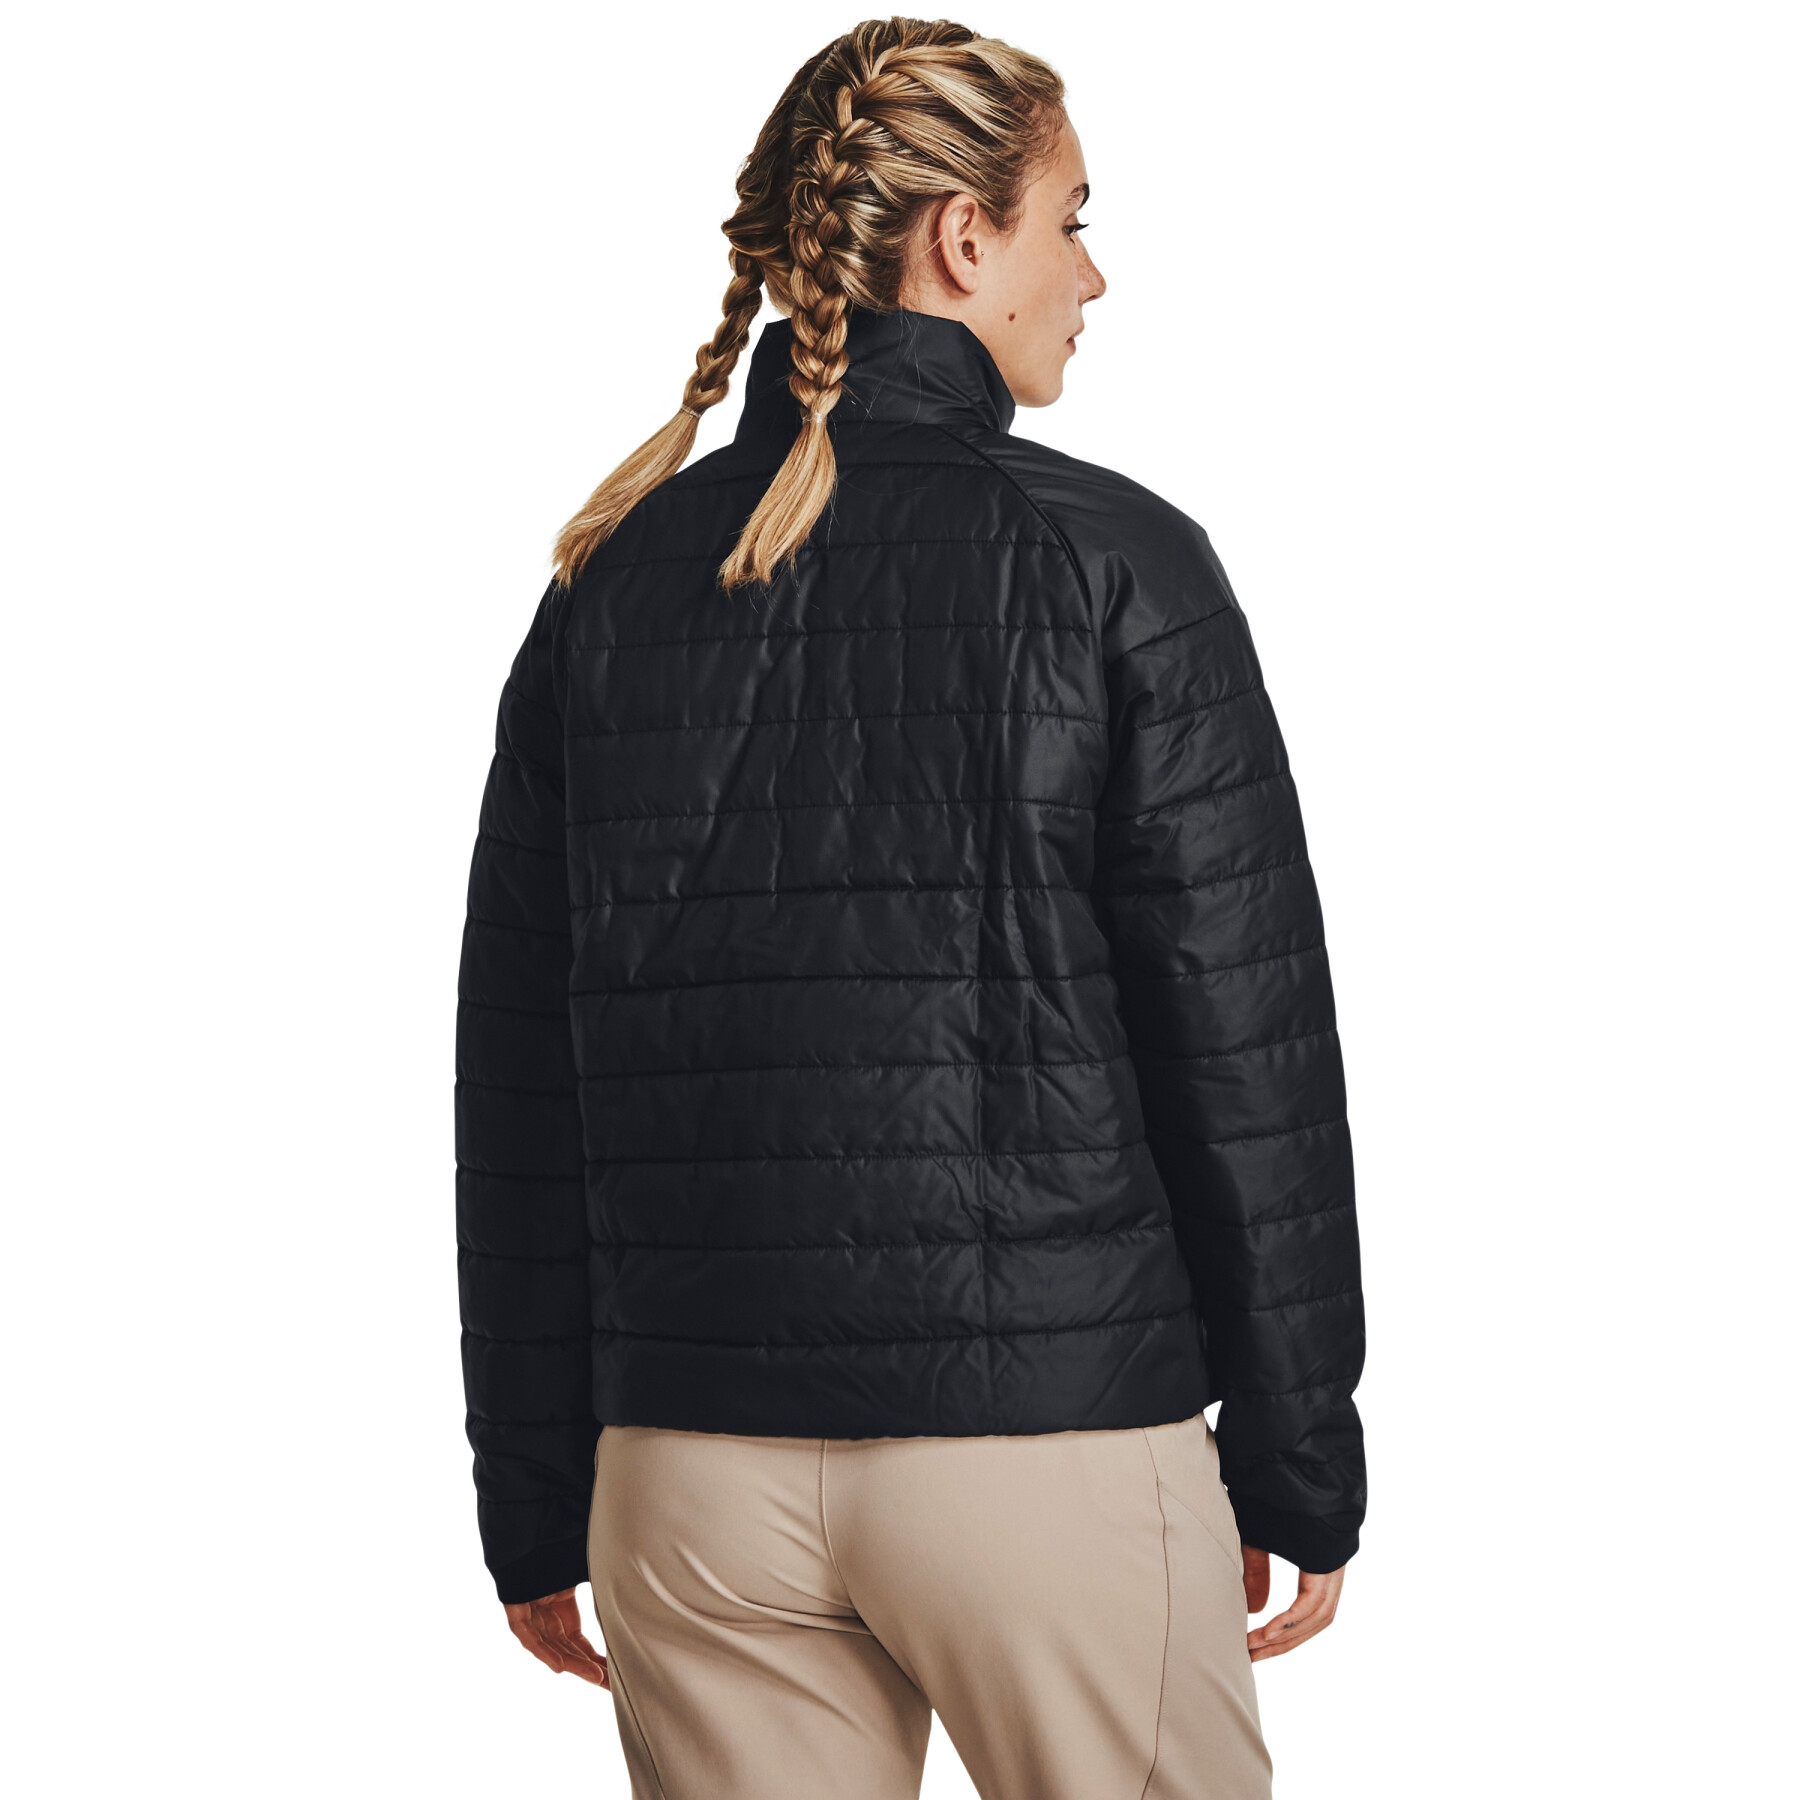 Waterproof jacket for women Under Armour Storm